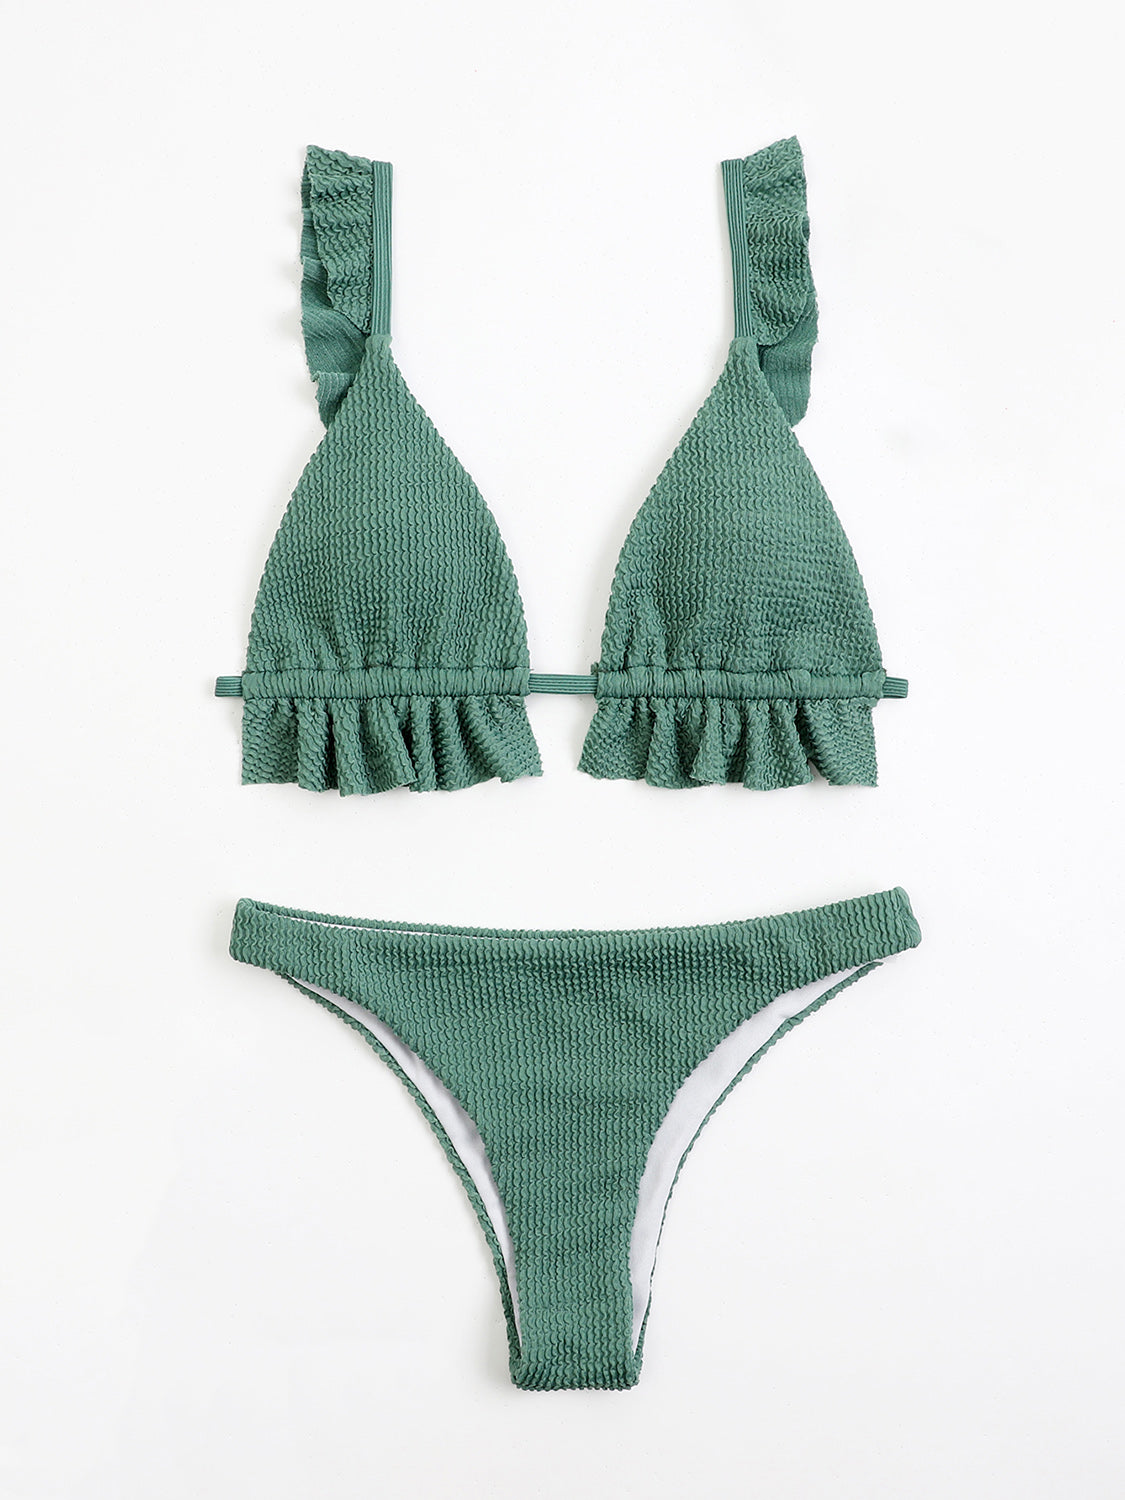 TEEK - Ruffled Textured Wide Strap Two-Piece Bikini Set SWIMWEAR TEEK Trend Deep Teal S 